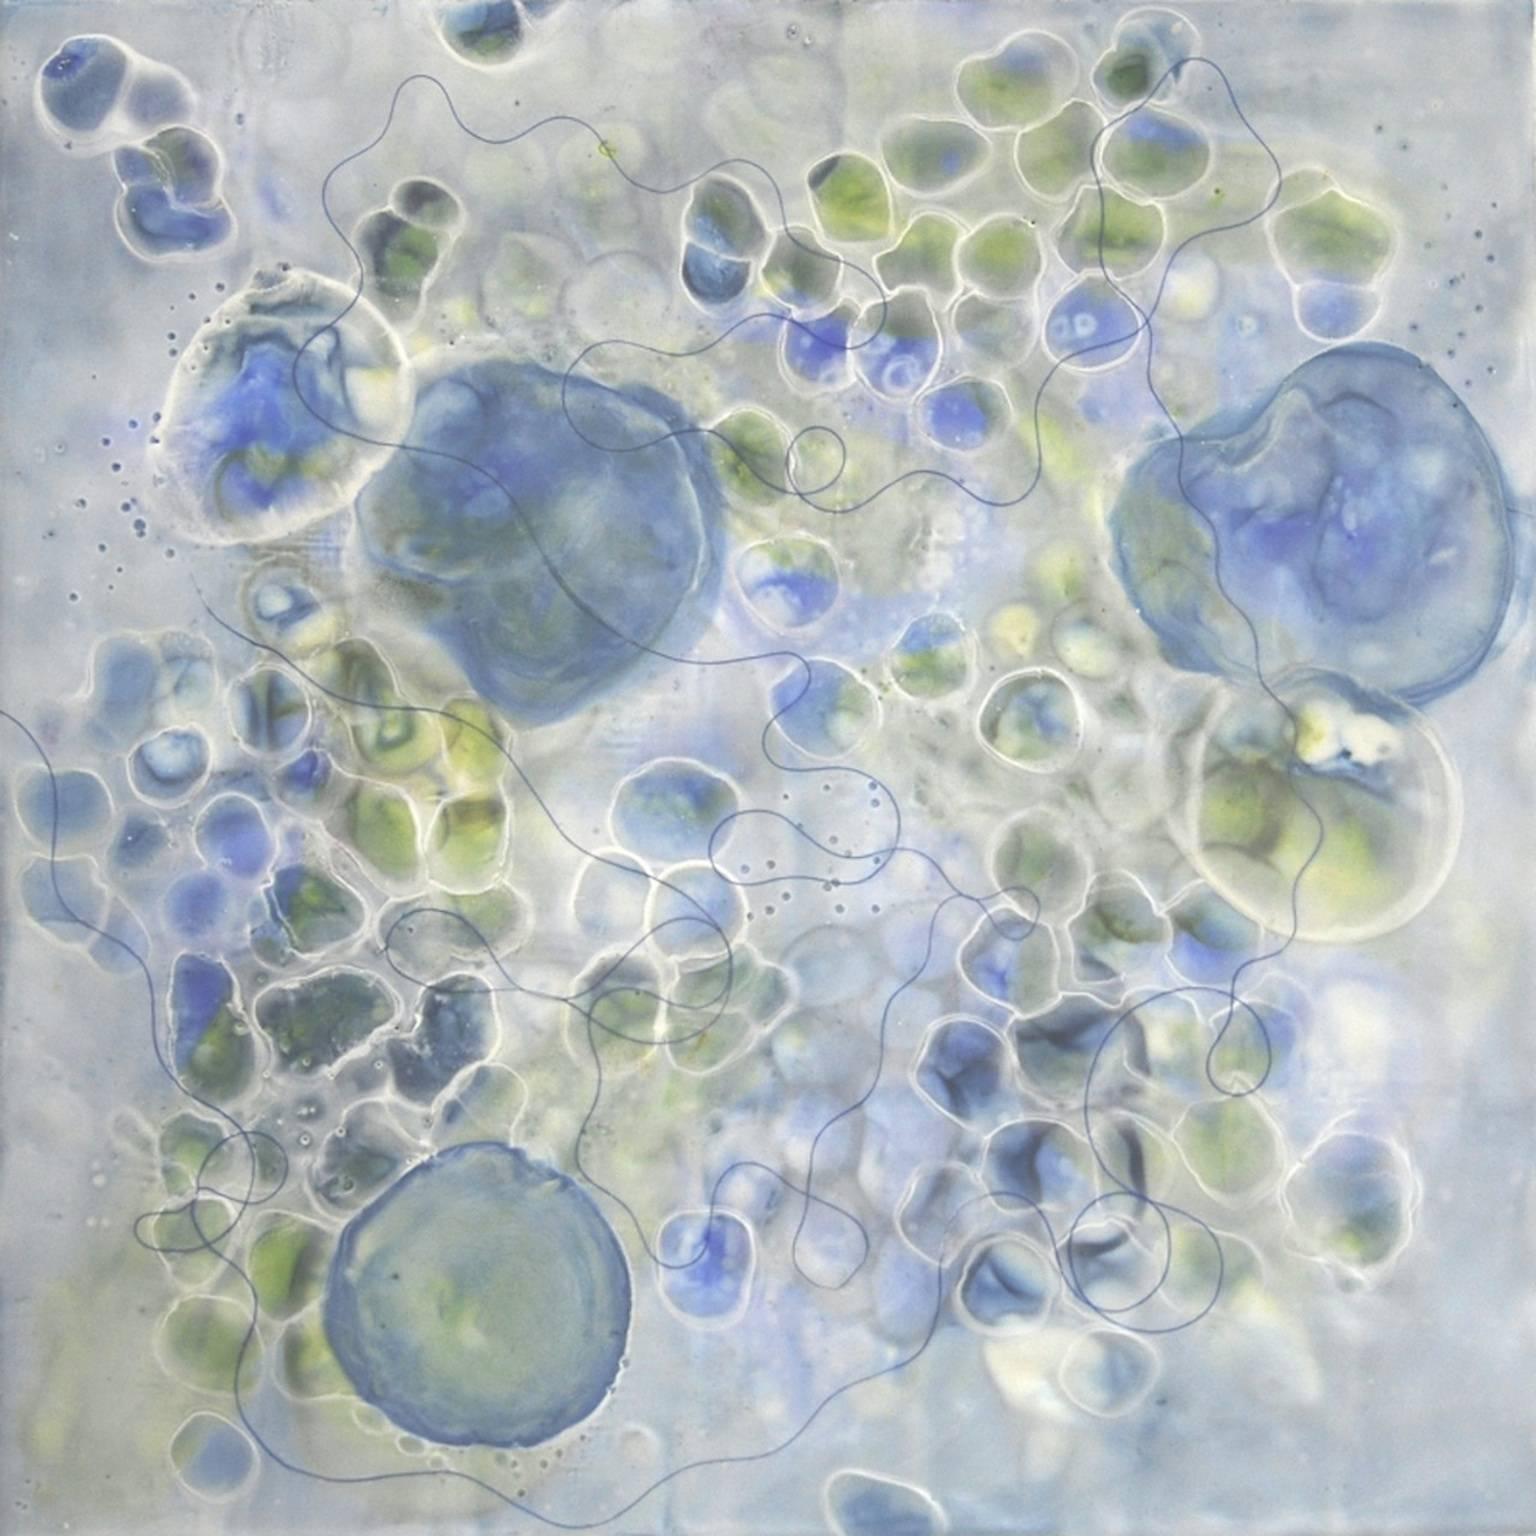 "Bio Flow 3", microscopic, blues, greens, whites, encaustic, pastel, mixed media